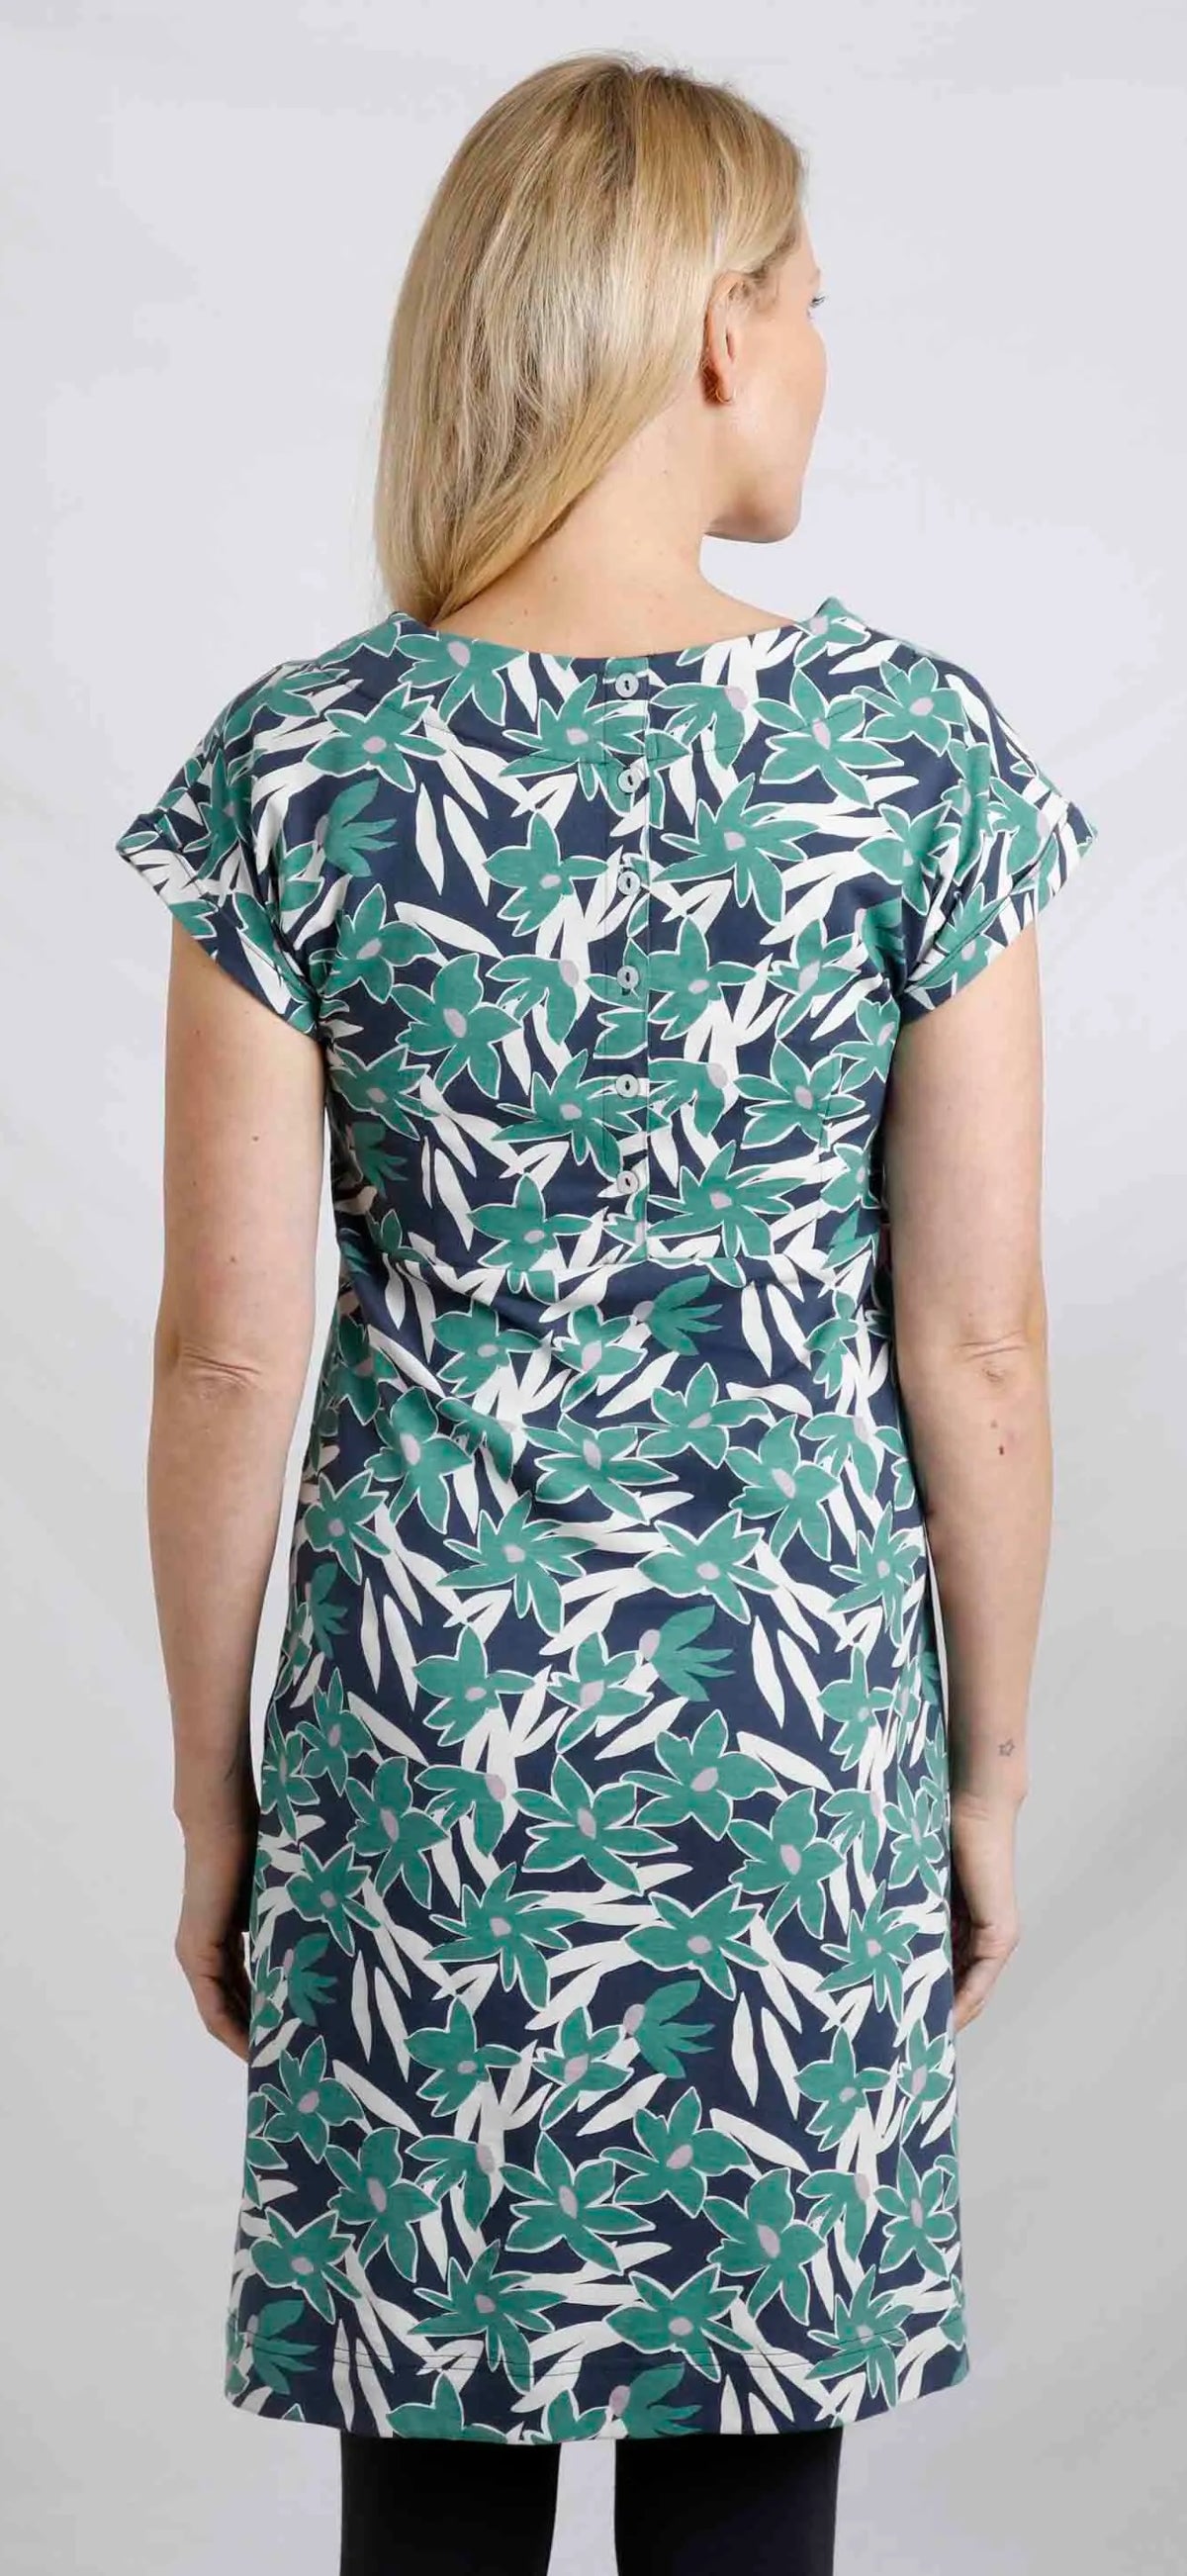 Women's Tallahassee short sleeve jersey dress from Weird Fish in a Dark Jade Green floral pattern.